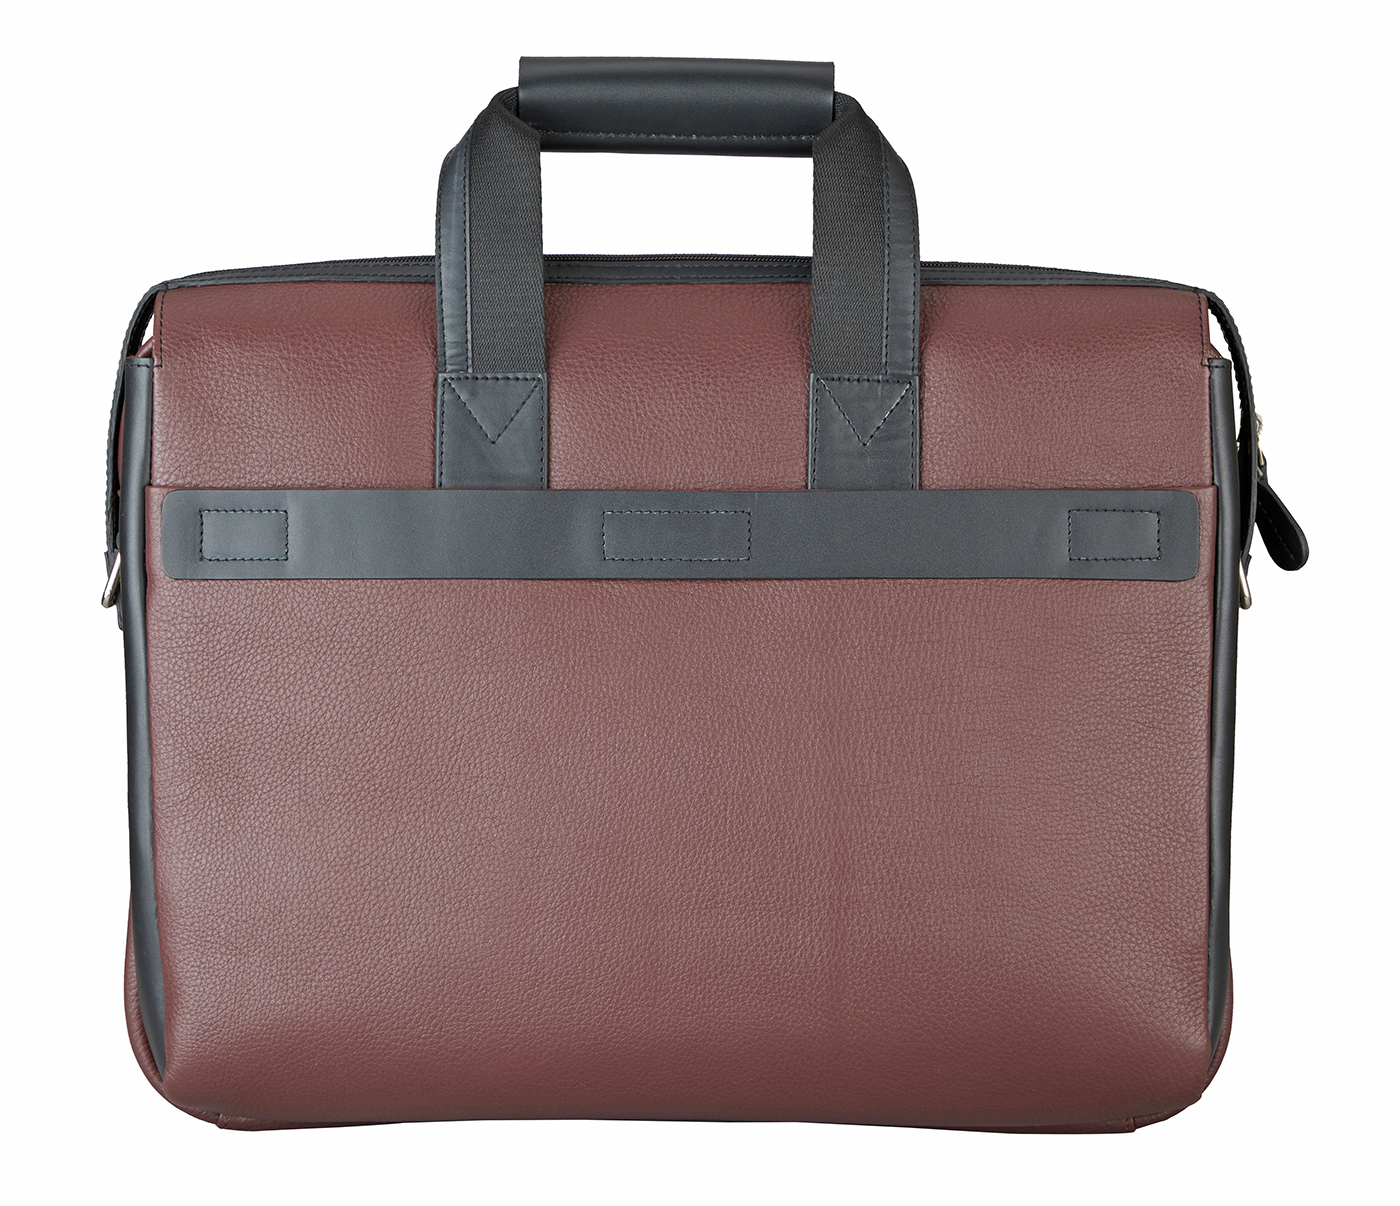 Portfolio / Laptop Bag-Henry-Laptop office executive bag in Genuine Leather - Wine/Black